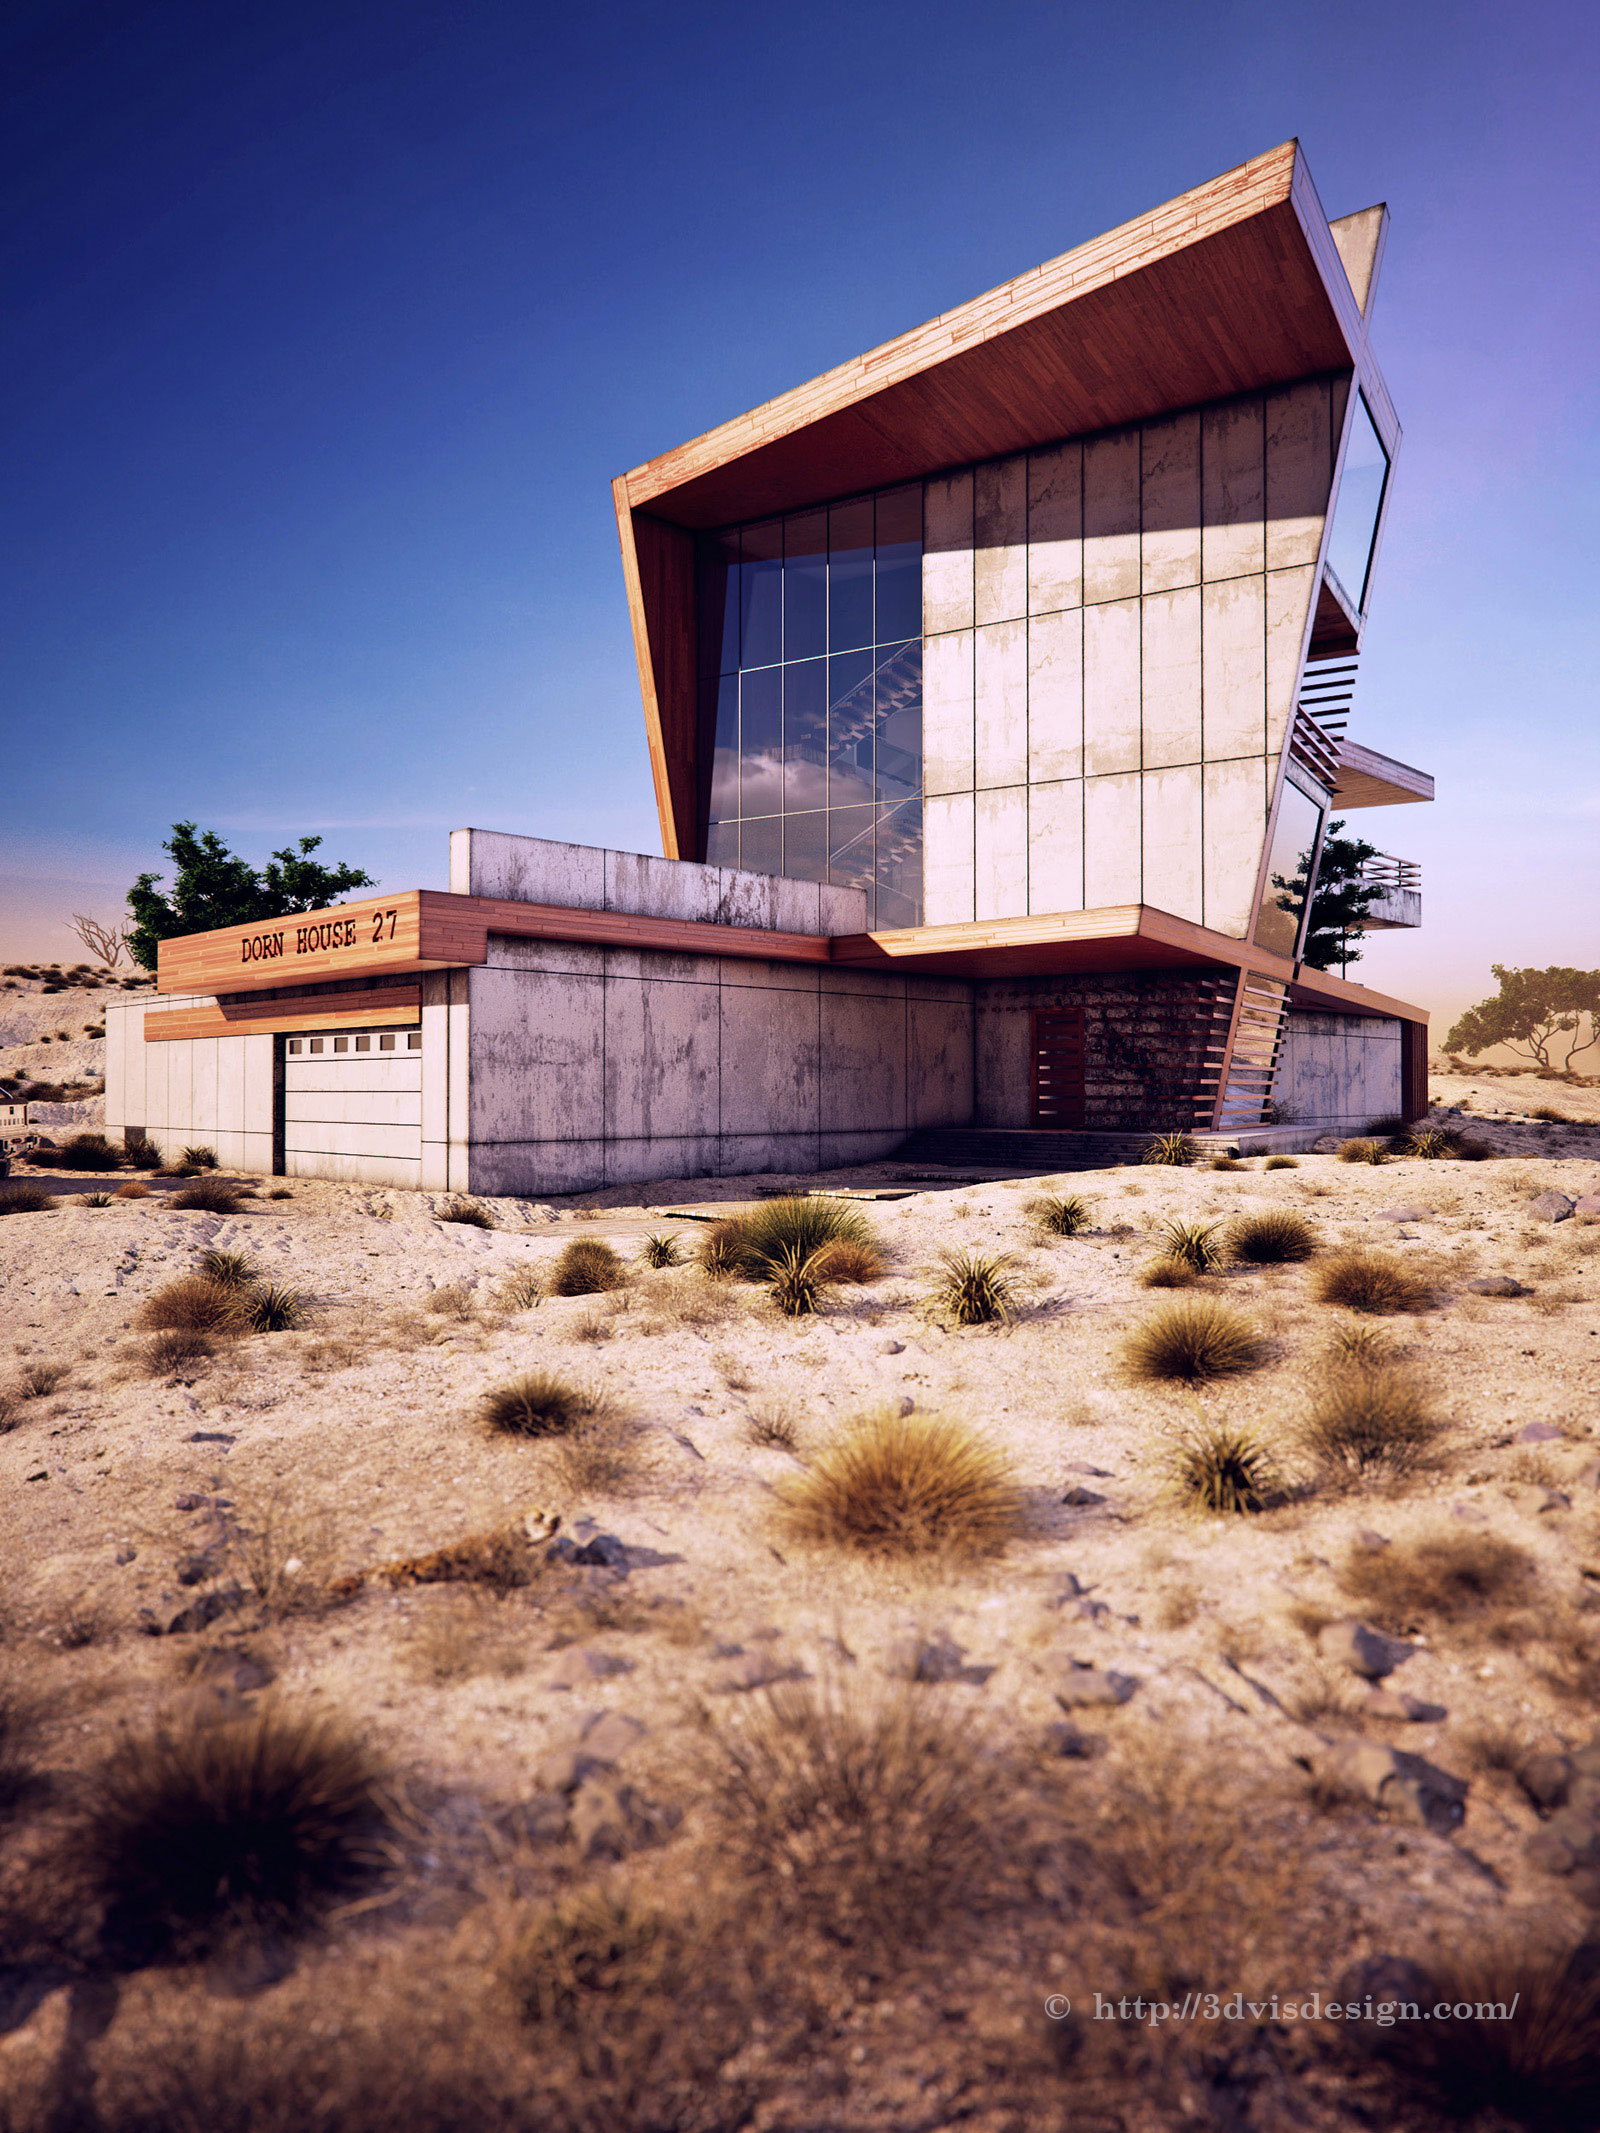 d ds max vray photoshop architectural rendering exterior desert rose dVis design